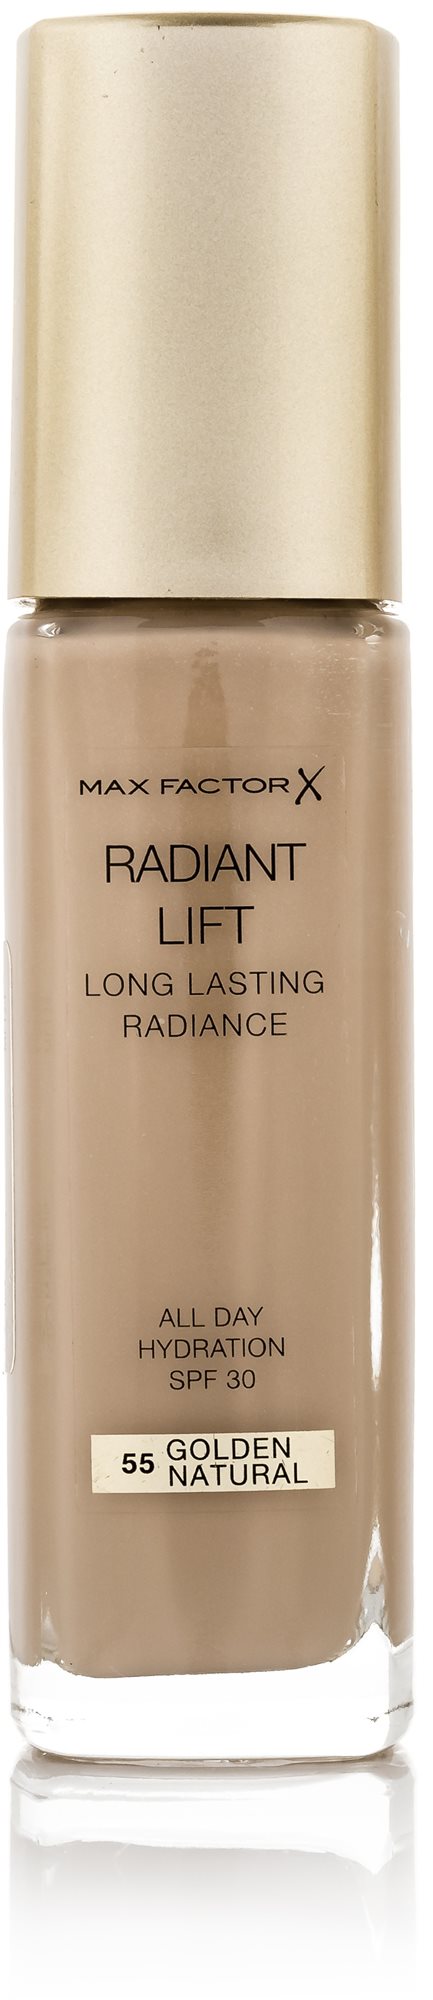 Alapozó MAX FACTOR Radiant Lift Foundation SPF30 055 Golden Natural 30 ml